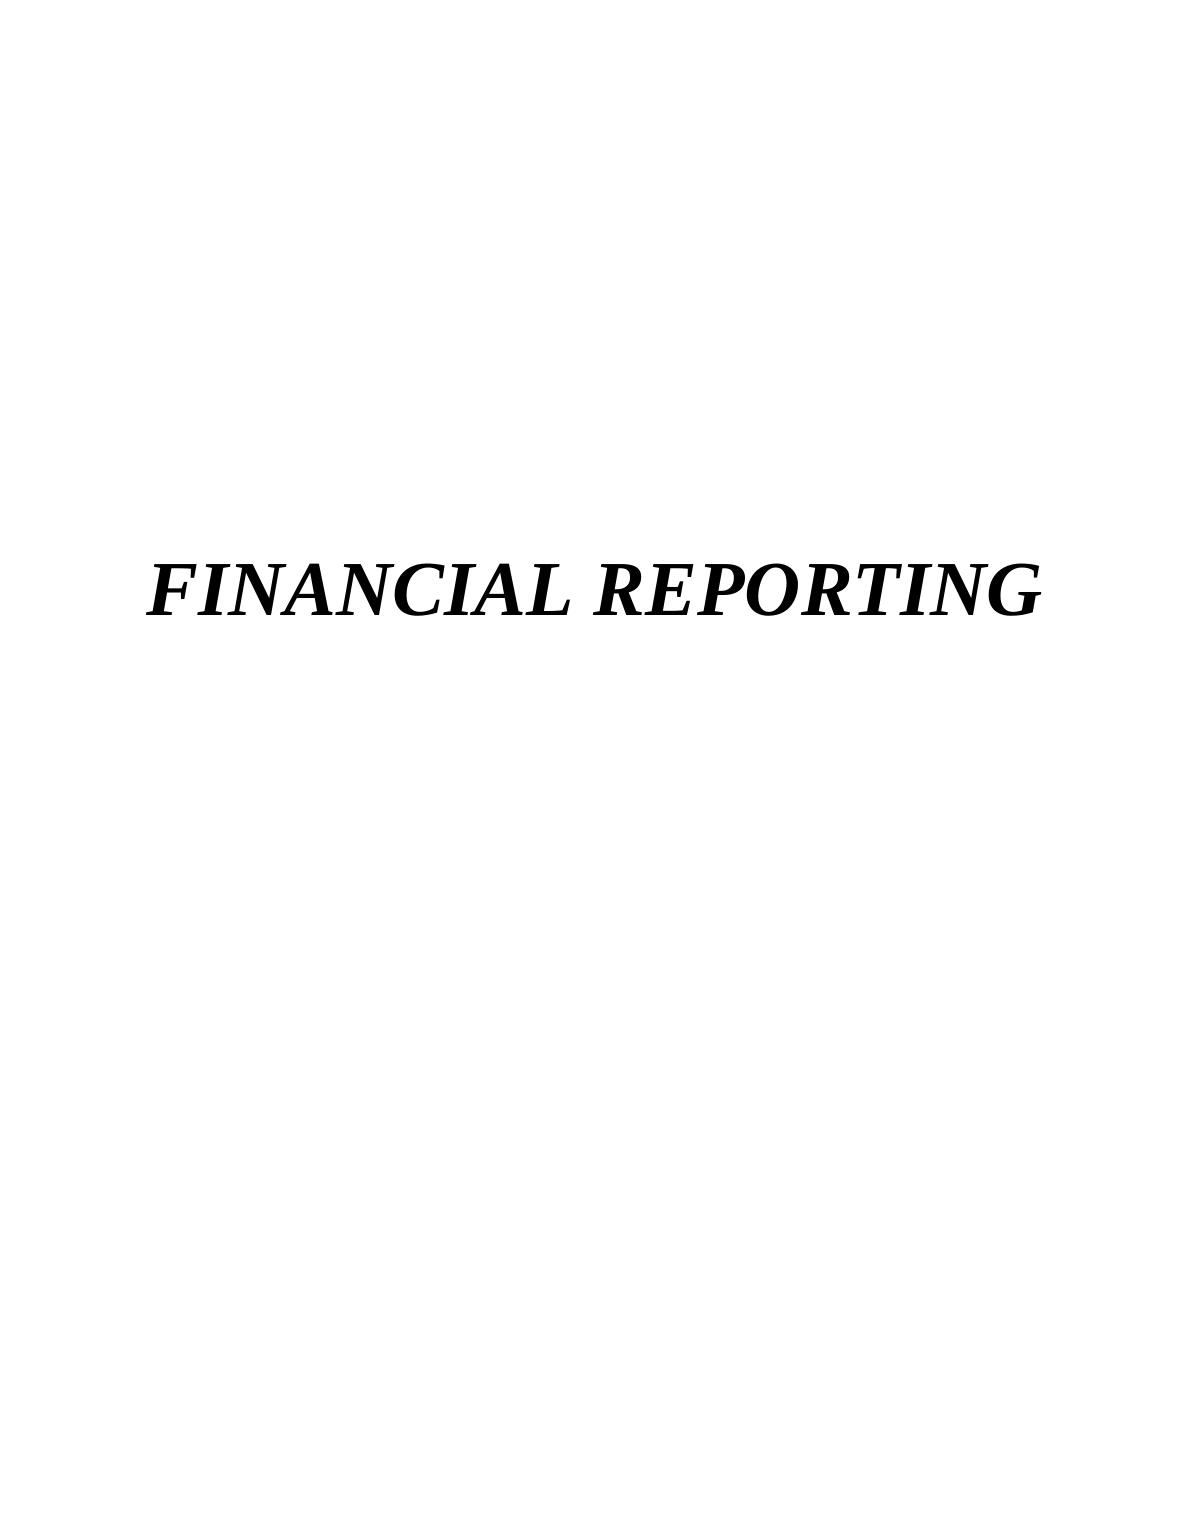 Conceptual and Regulatory Framework of Financial Reporting: PDF_1